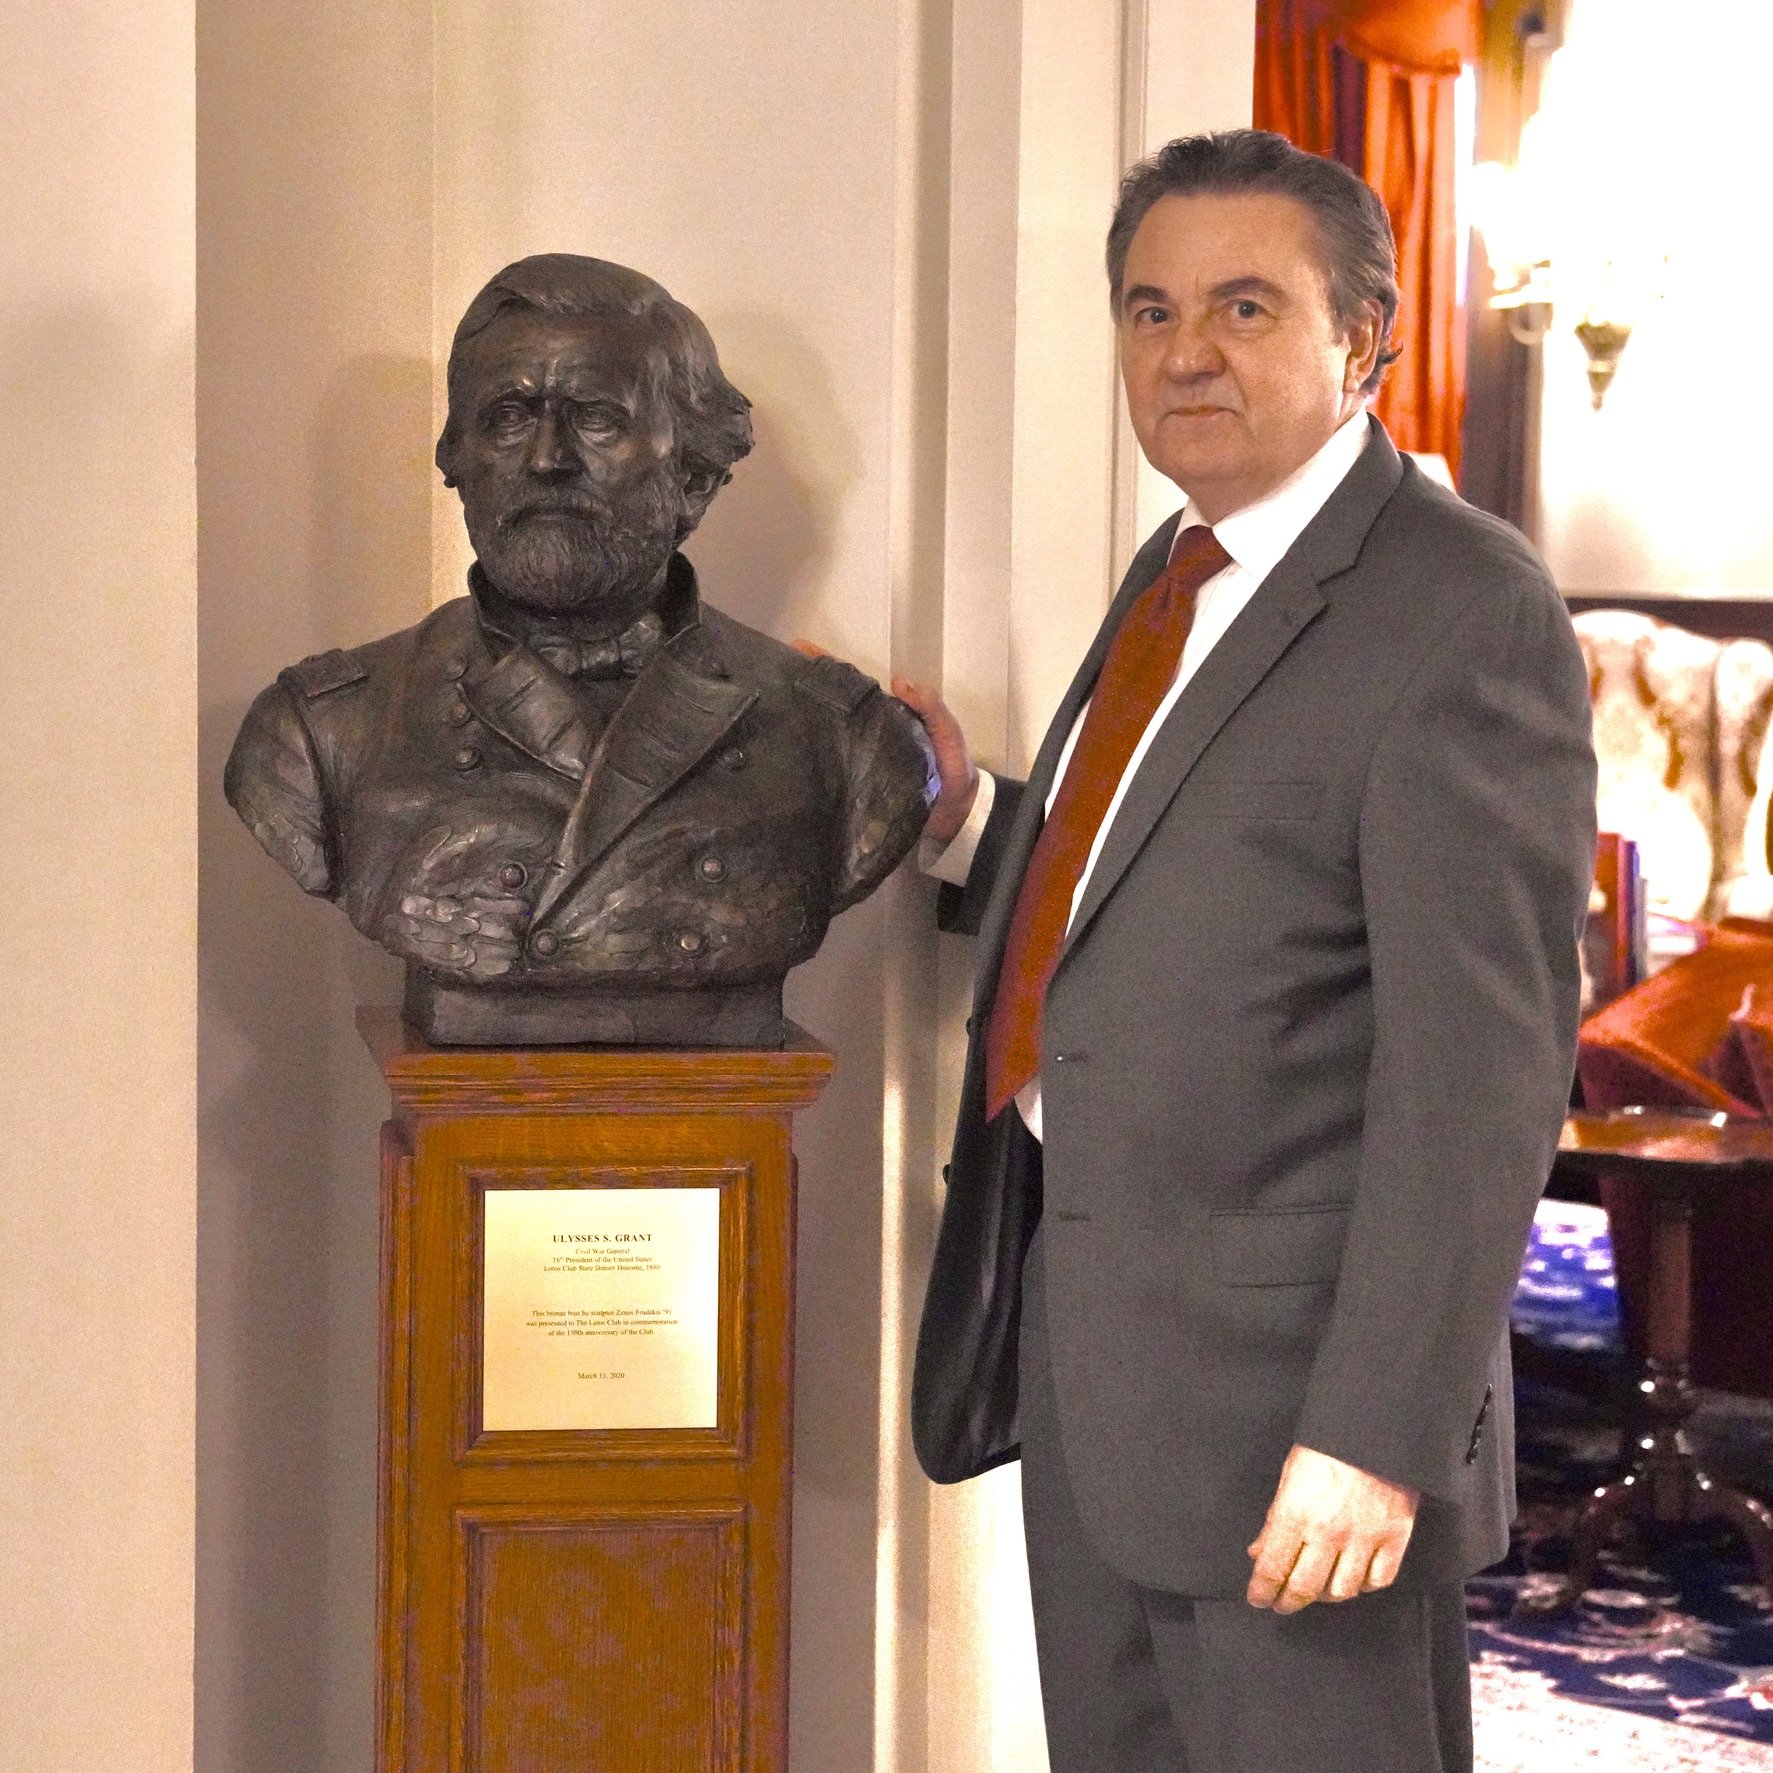  Zenos Frudakis with his sculpture of General Grant.. 